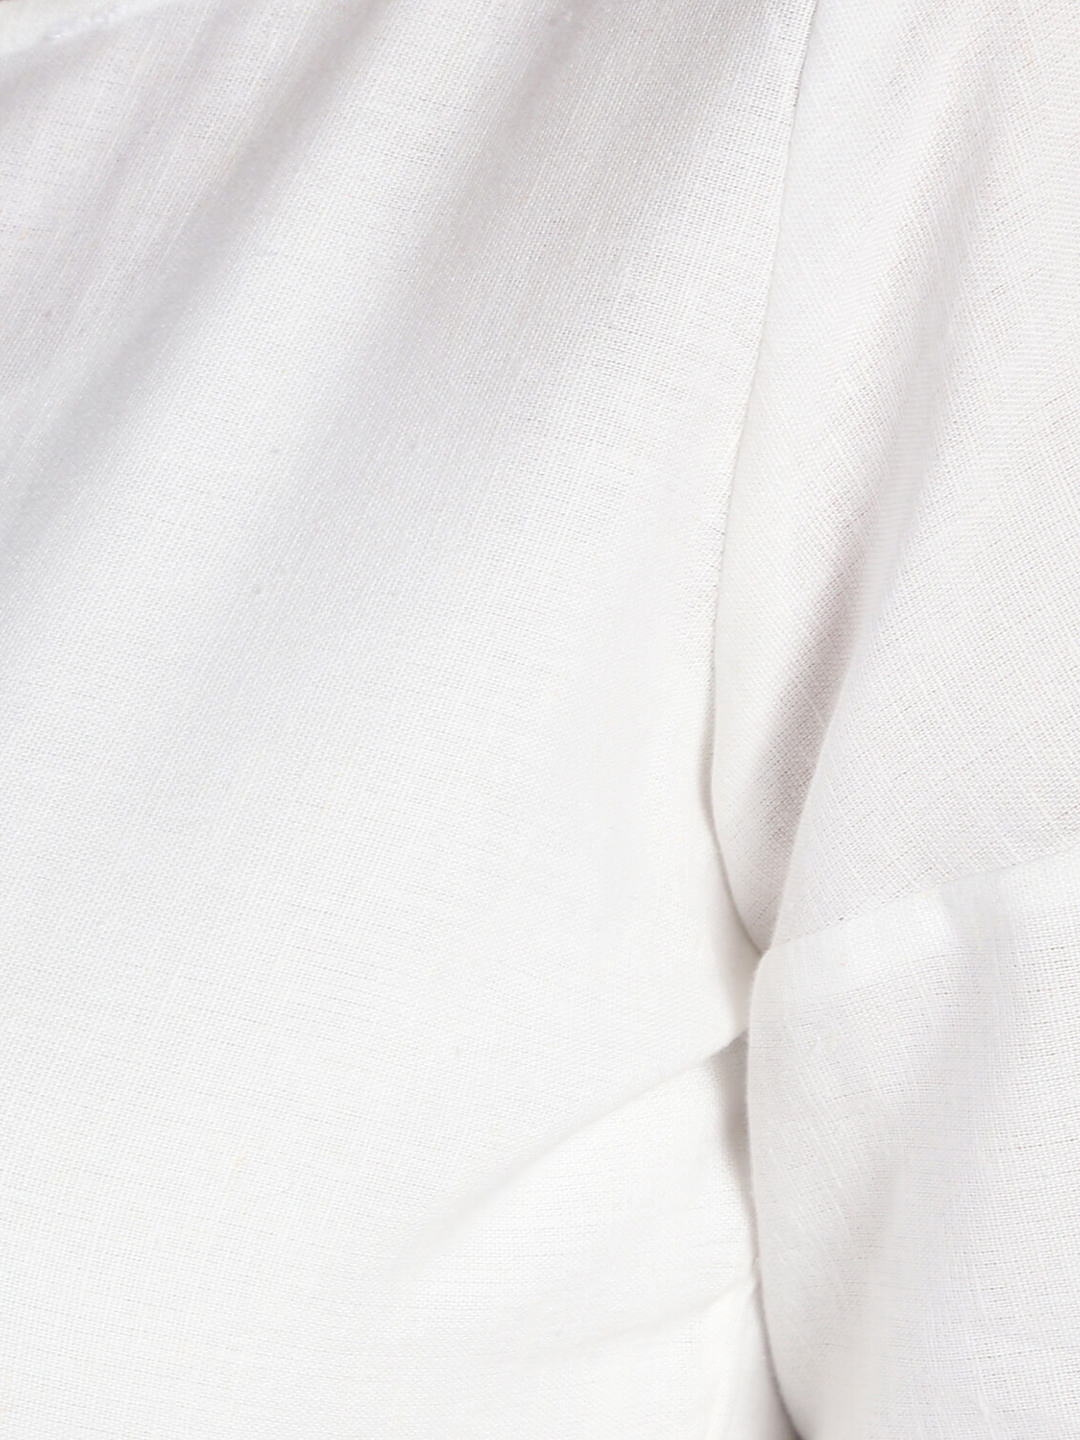 Geometric structured comfort cotton linen top